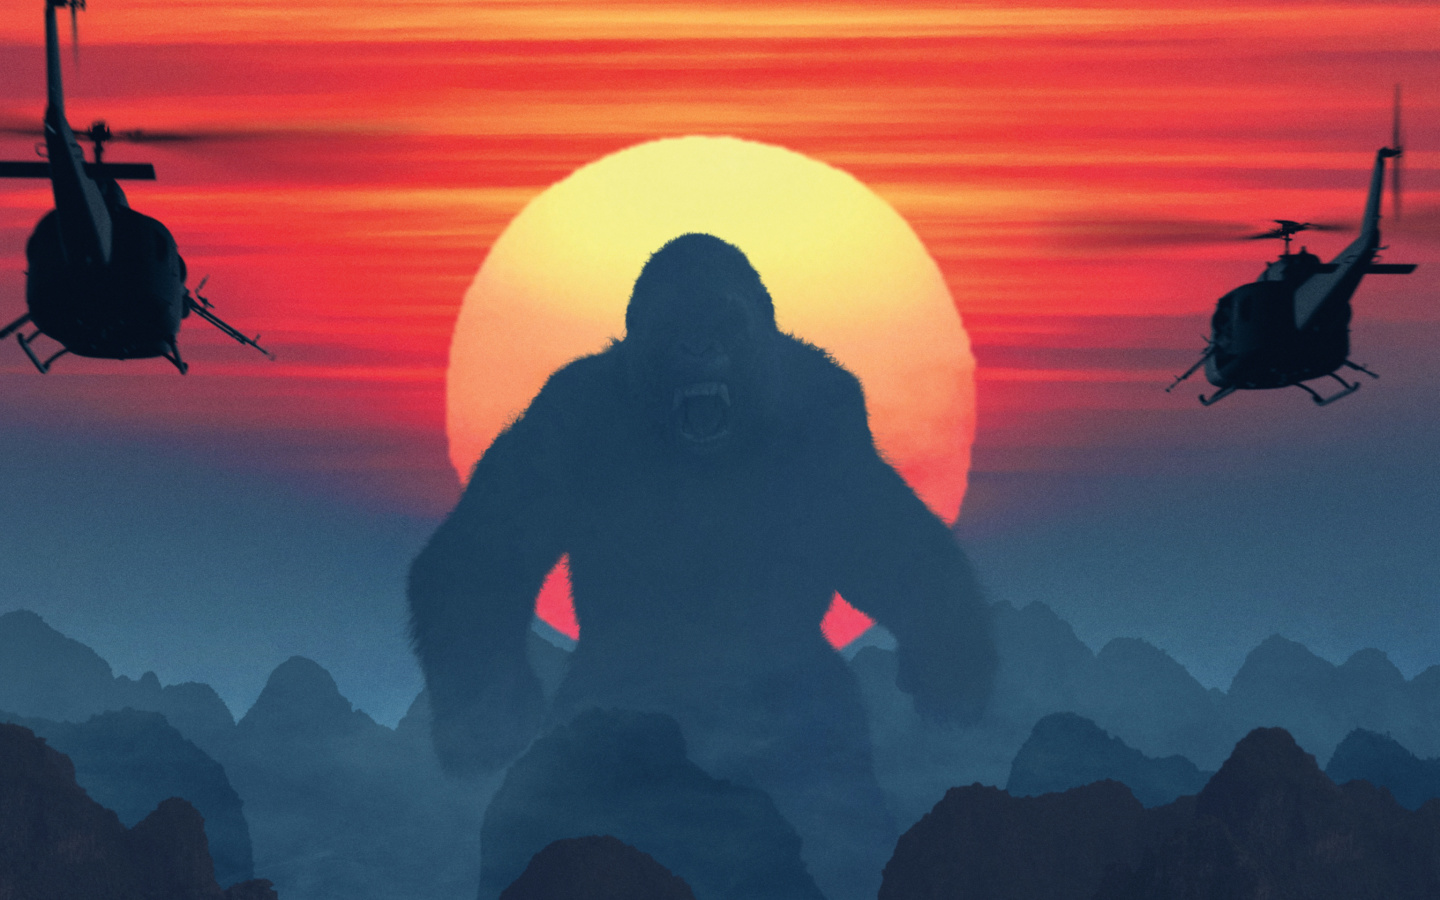 King Kong 2017 wallpaper 1440x900